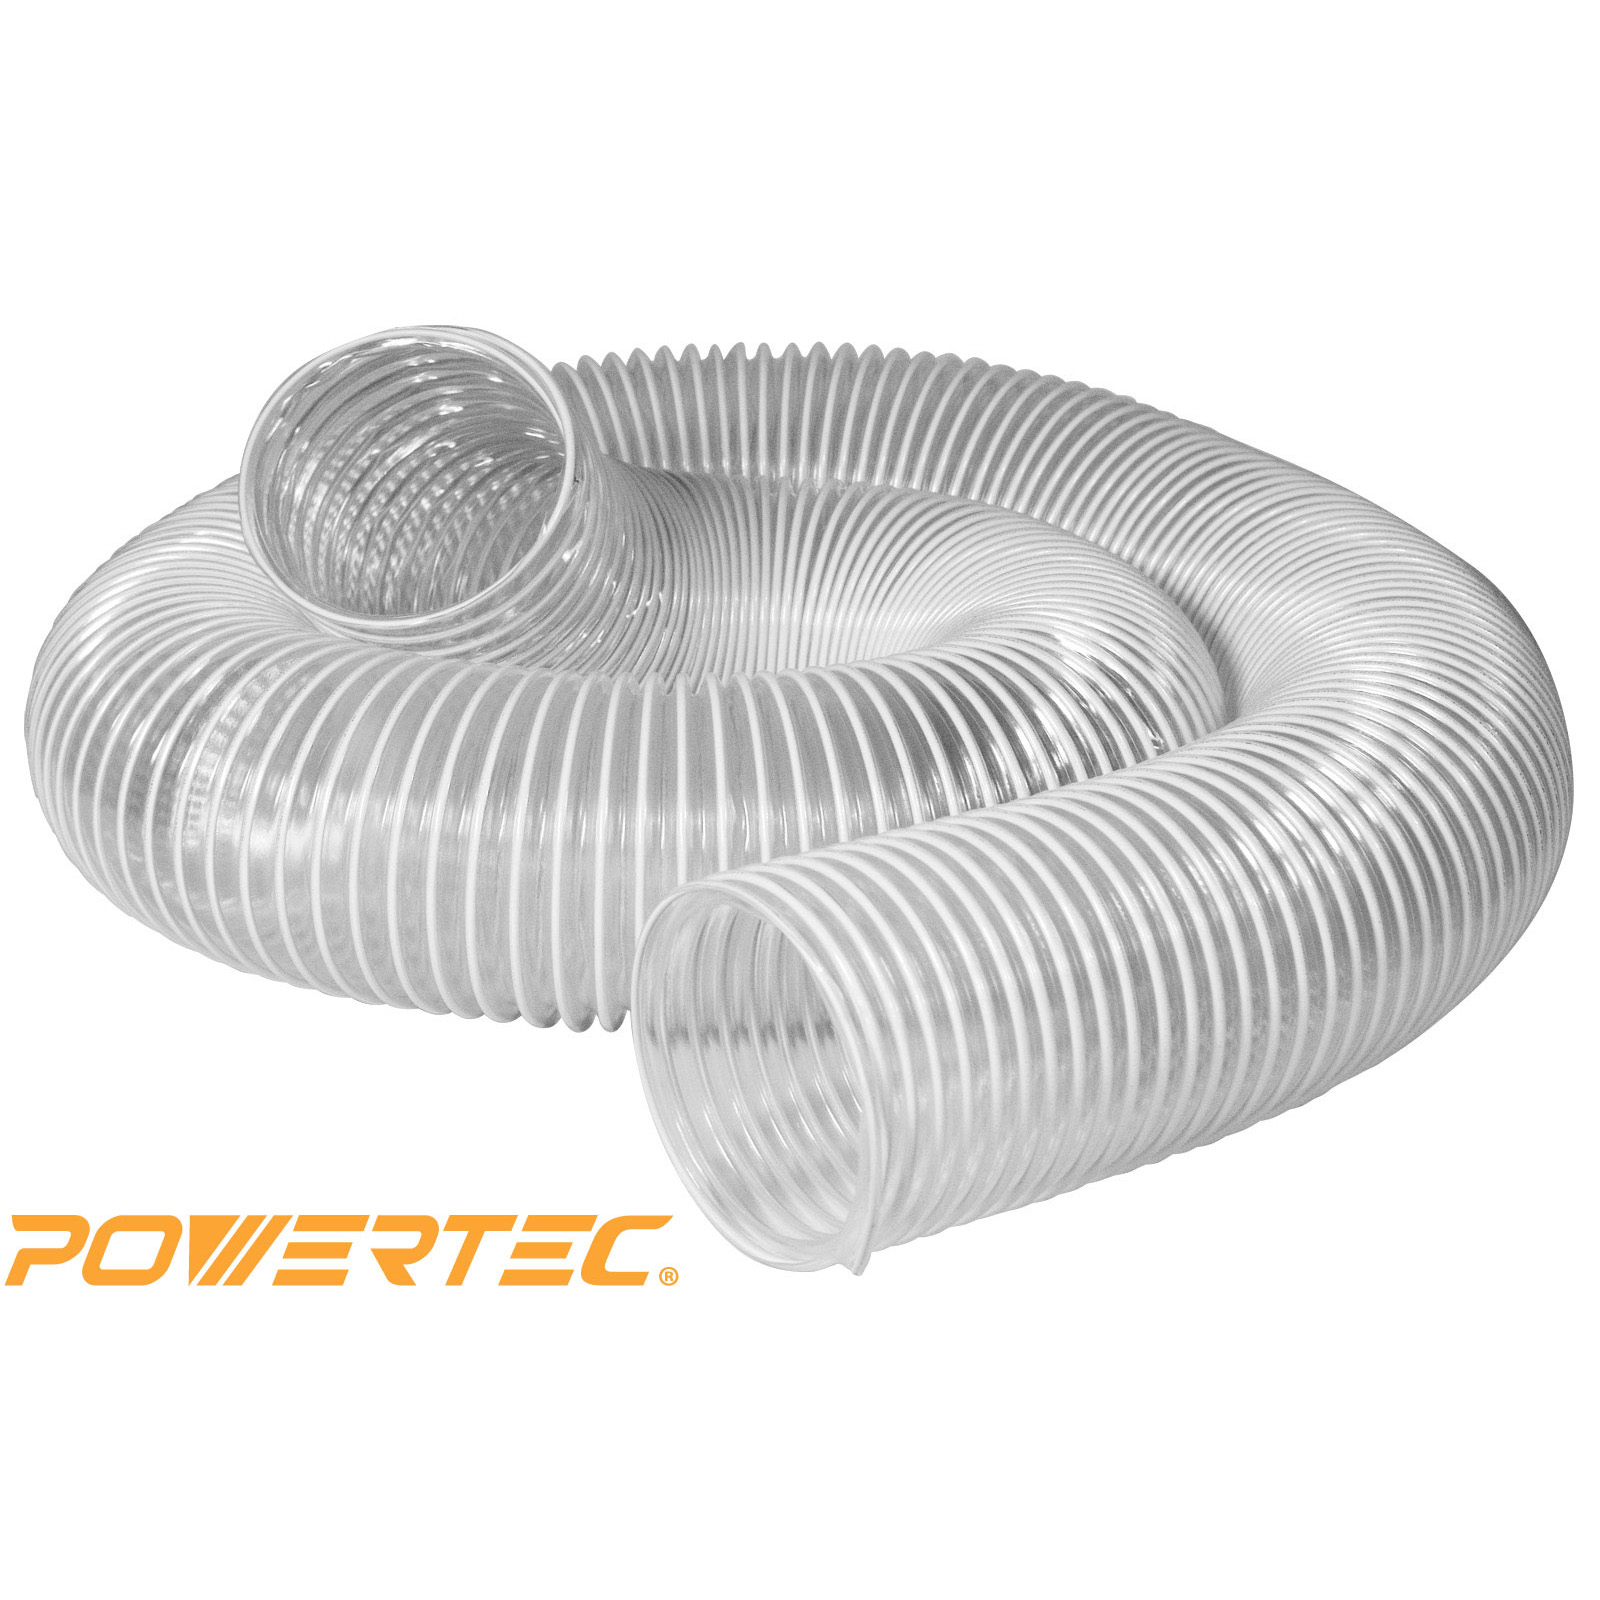 Powertec 70111 Heavy Duty 4-Inch x 10-Foot PVC Flexible Dust Collection Hose, Clear Color